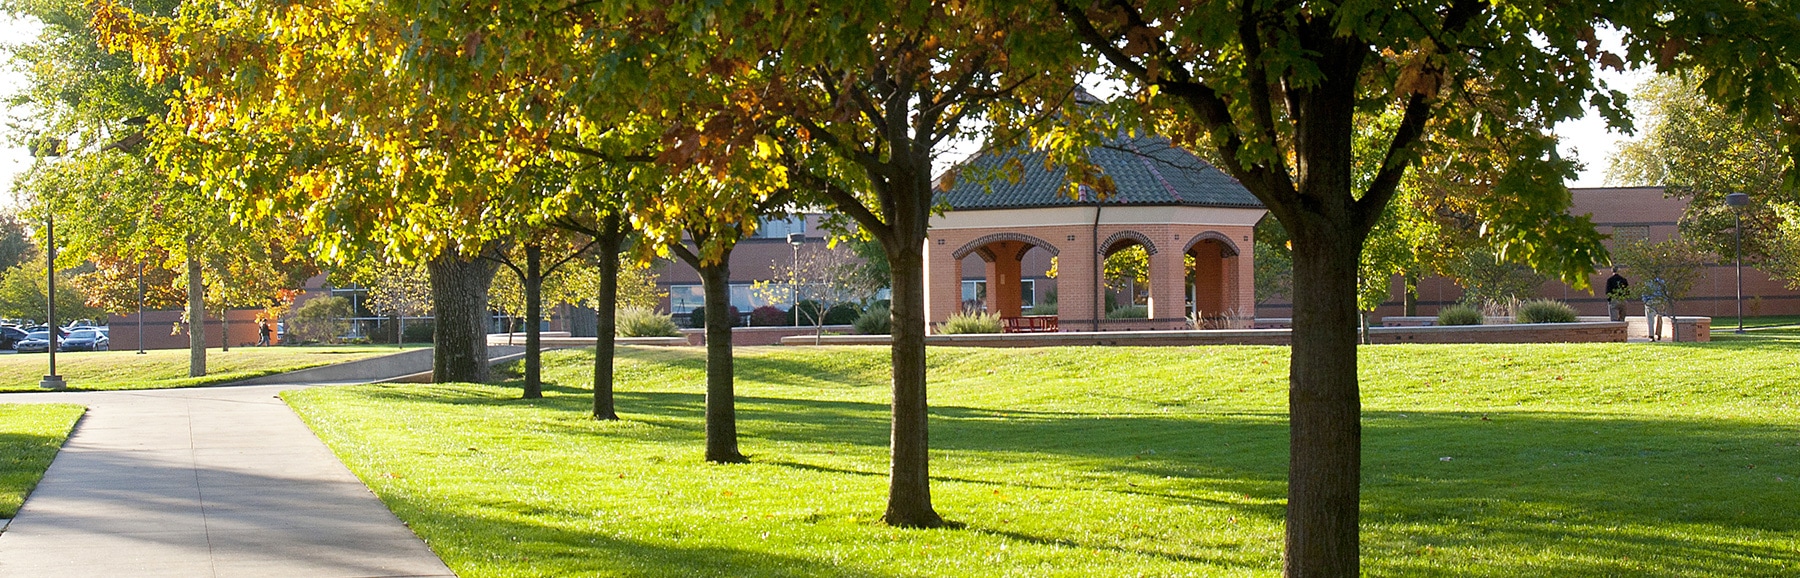 McPherson College Ranks In U.S. News & World Report “Best College” List